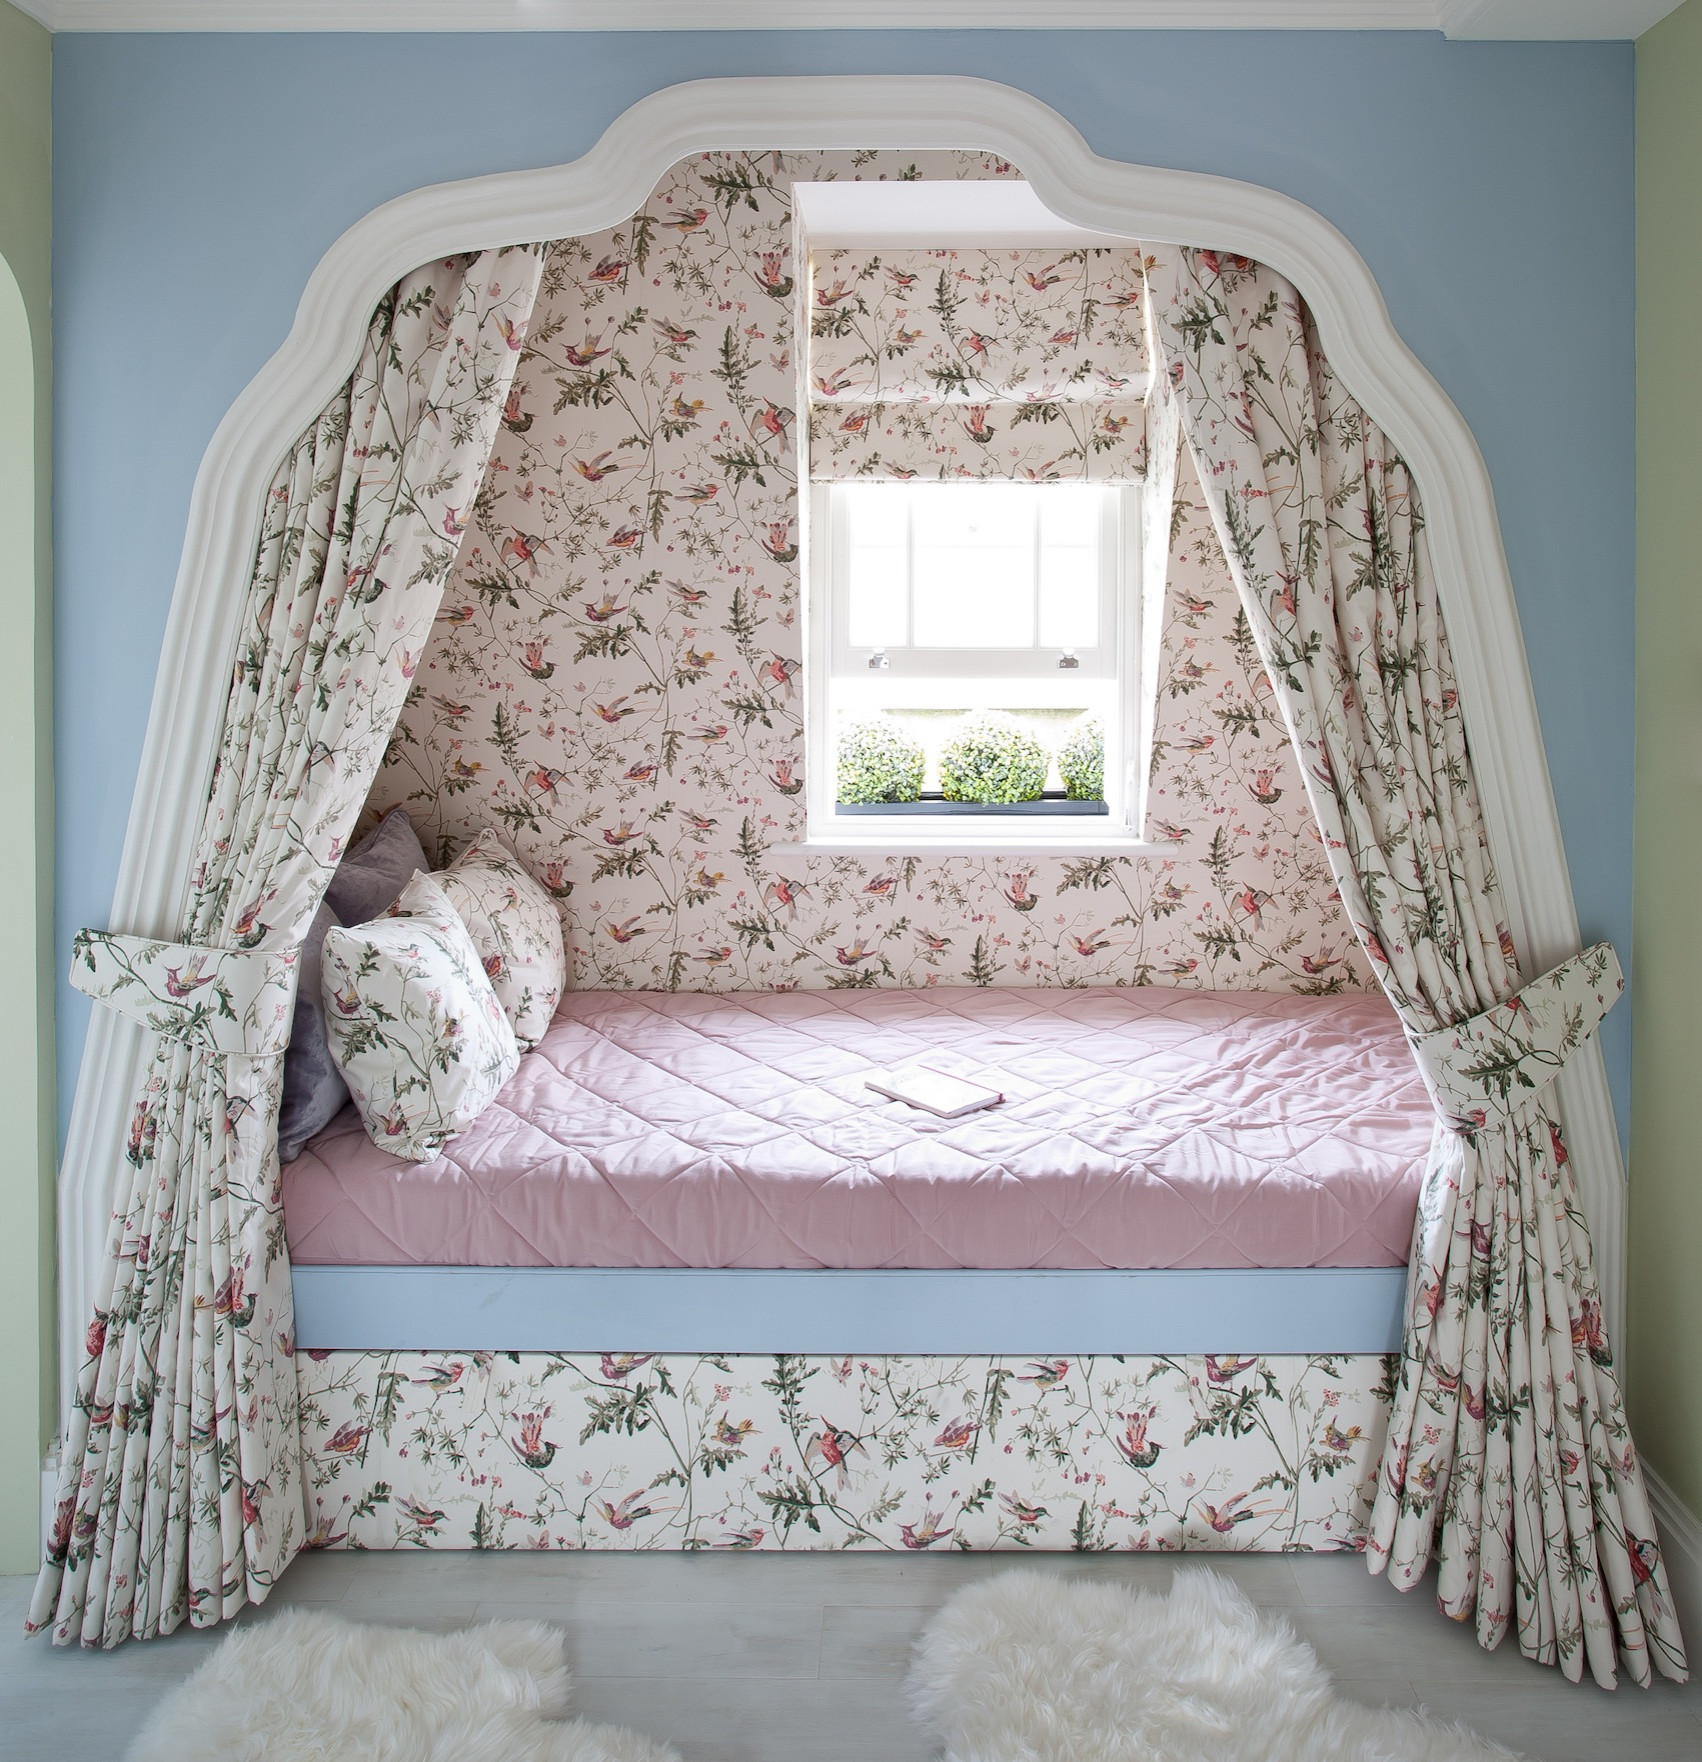 Teenage Girl Small Bedroom Houzz, How To Design A Teenage Girl S Small Bedroom